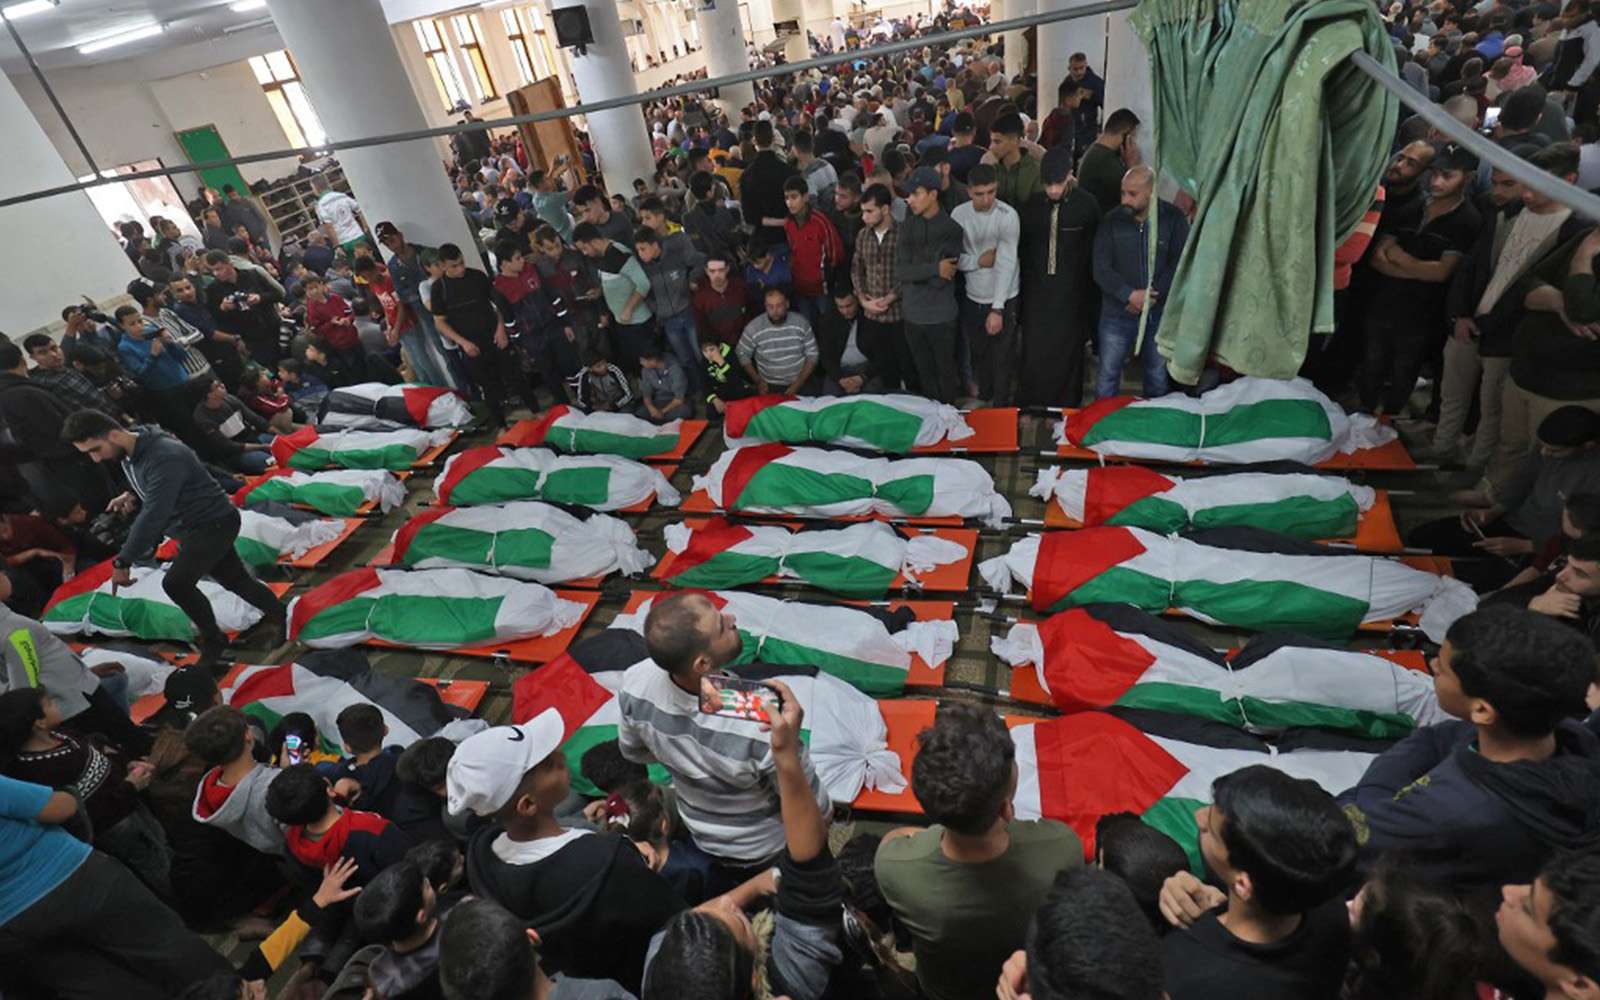 dead_people_in_gaza_due_to_israeli_attacks.jpg